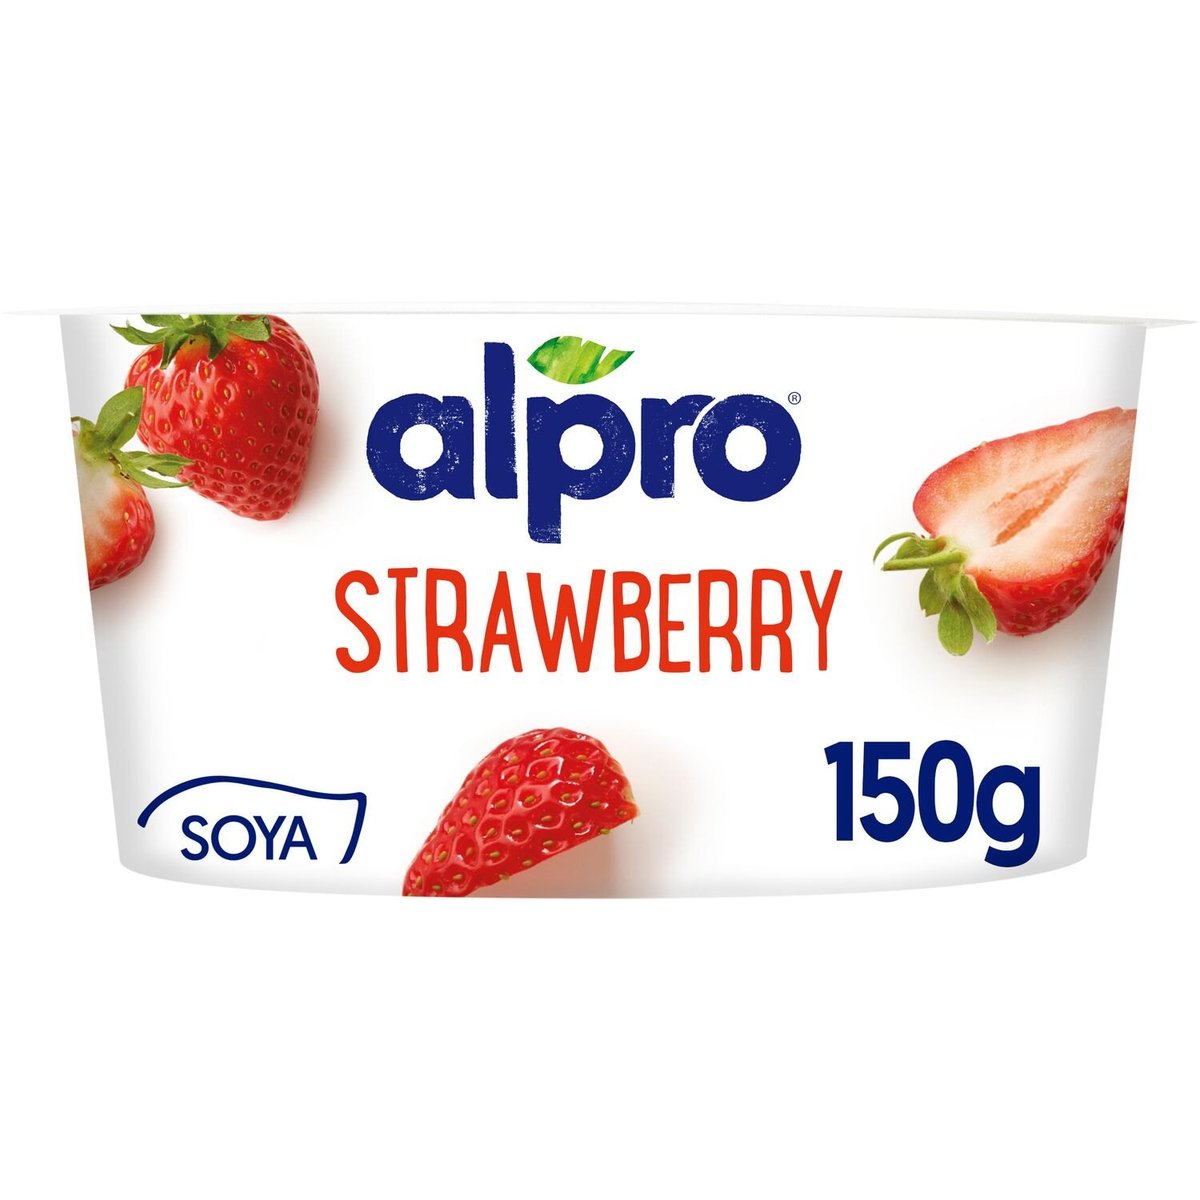 Alpro Sójová alternativa jogurtu jahoda